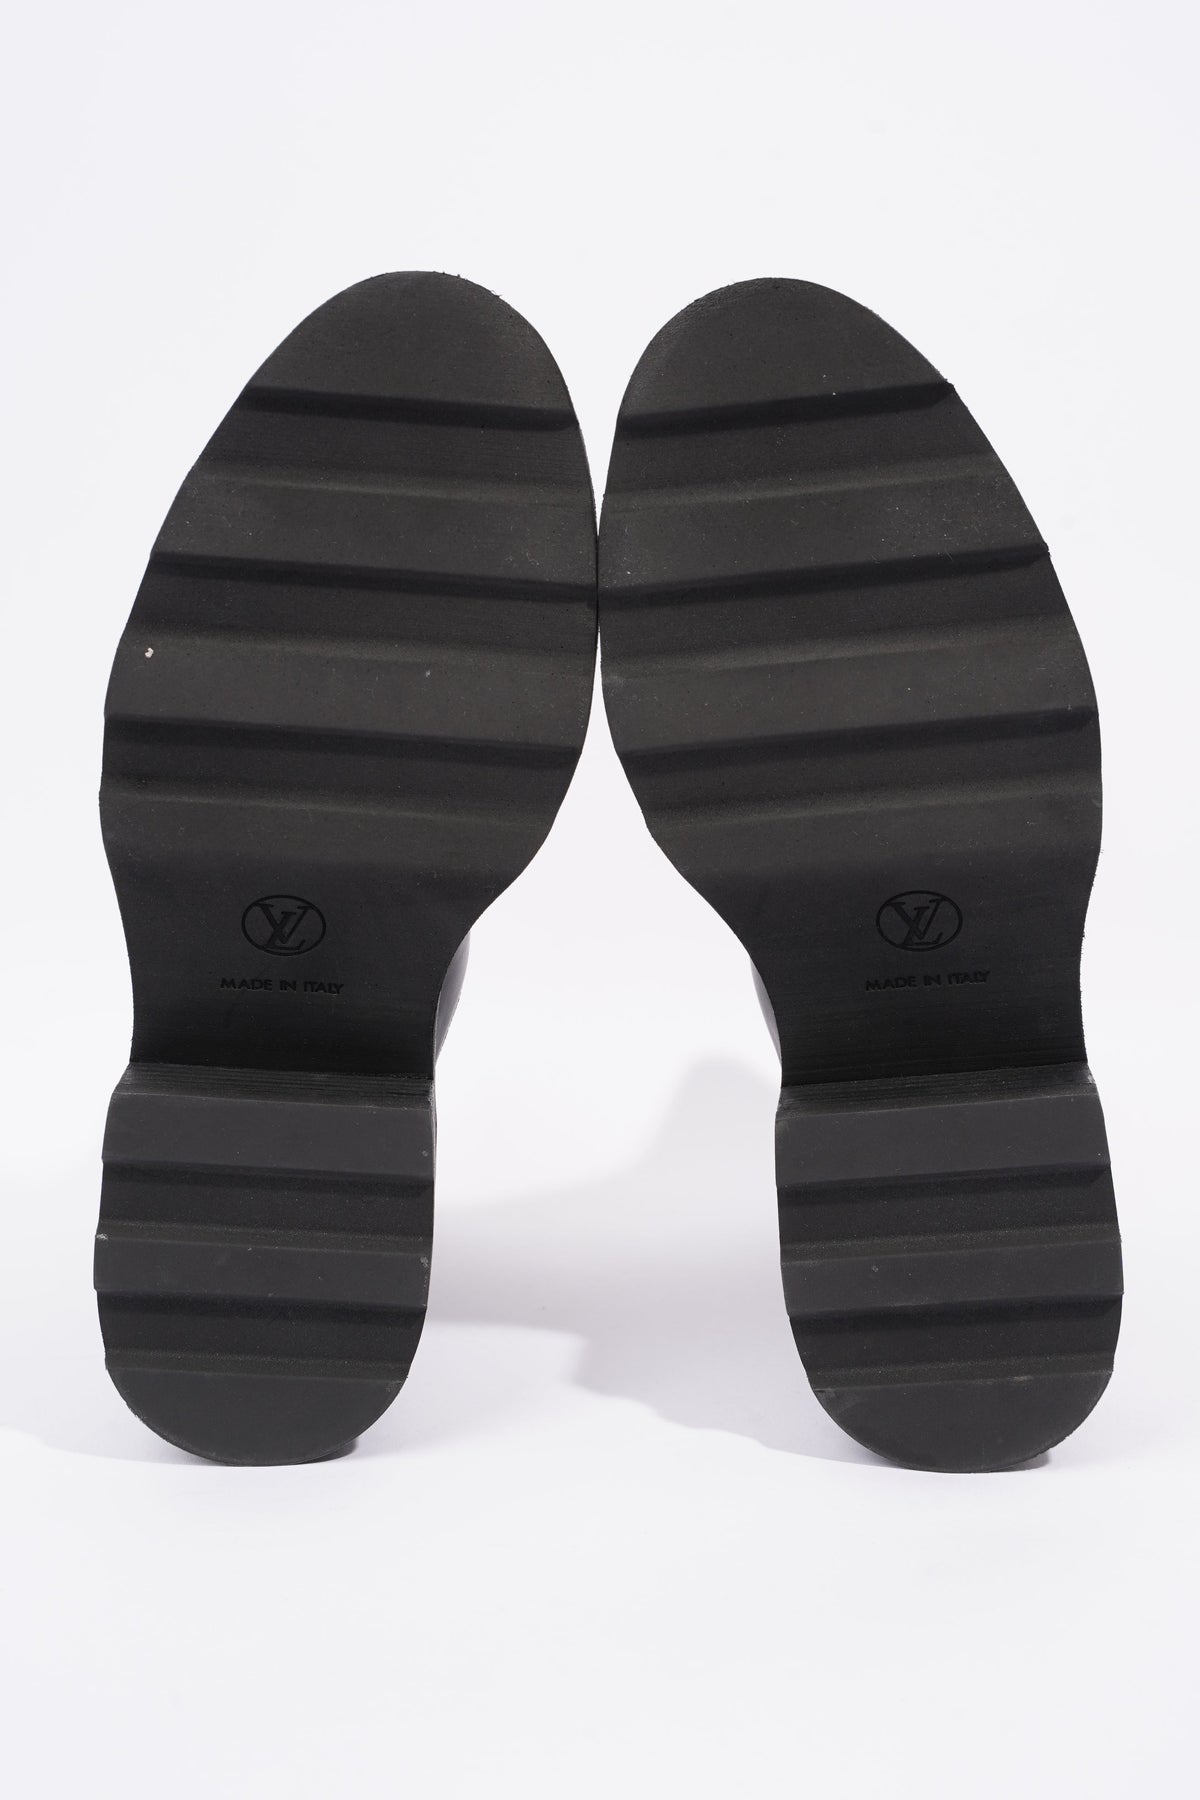 Louis Vuitton LV Record Chelsea Boot BLACK. Size 37.0